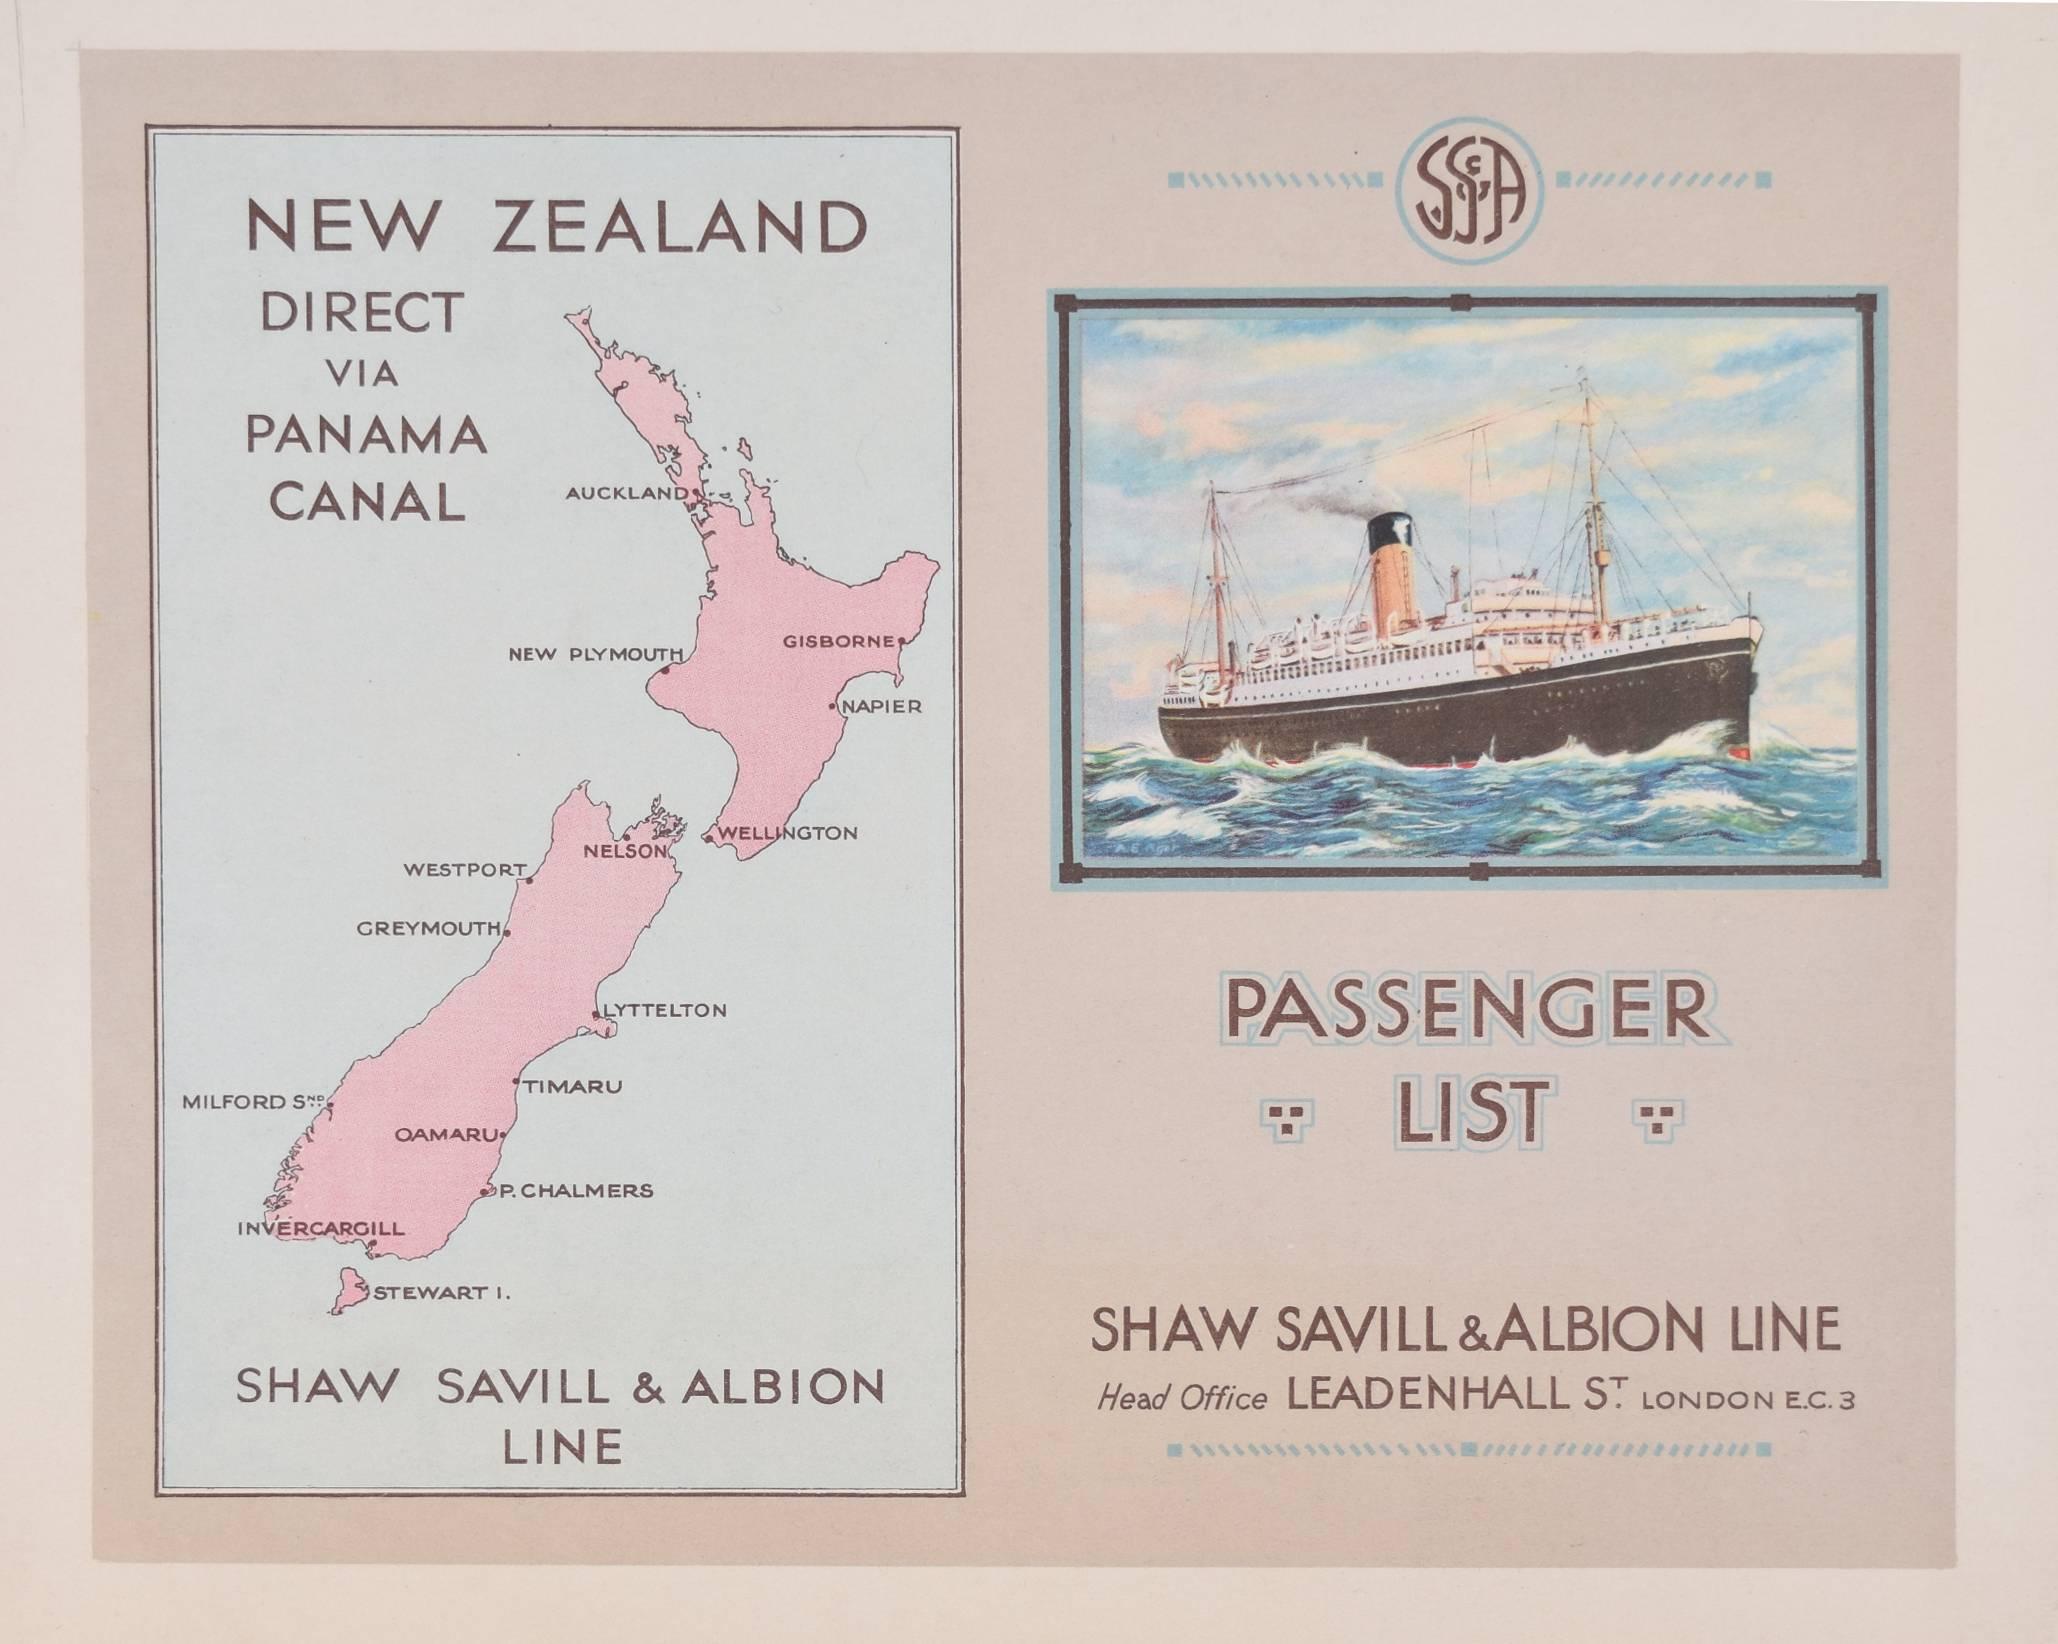 Unknown Print - Shaw Savill Line by A E Agar brochure Ocean Liners c1940s New Zealand via Panama